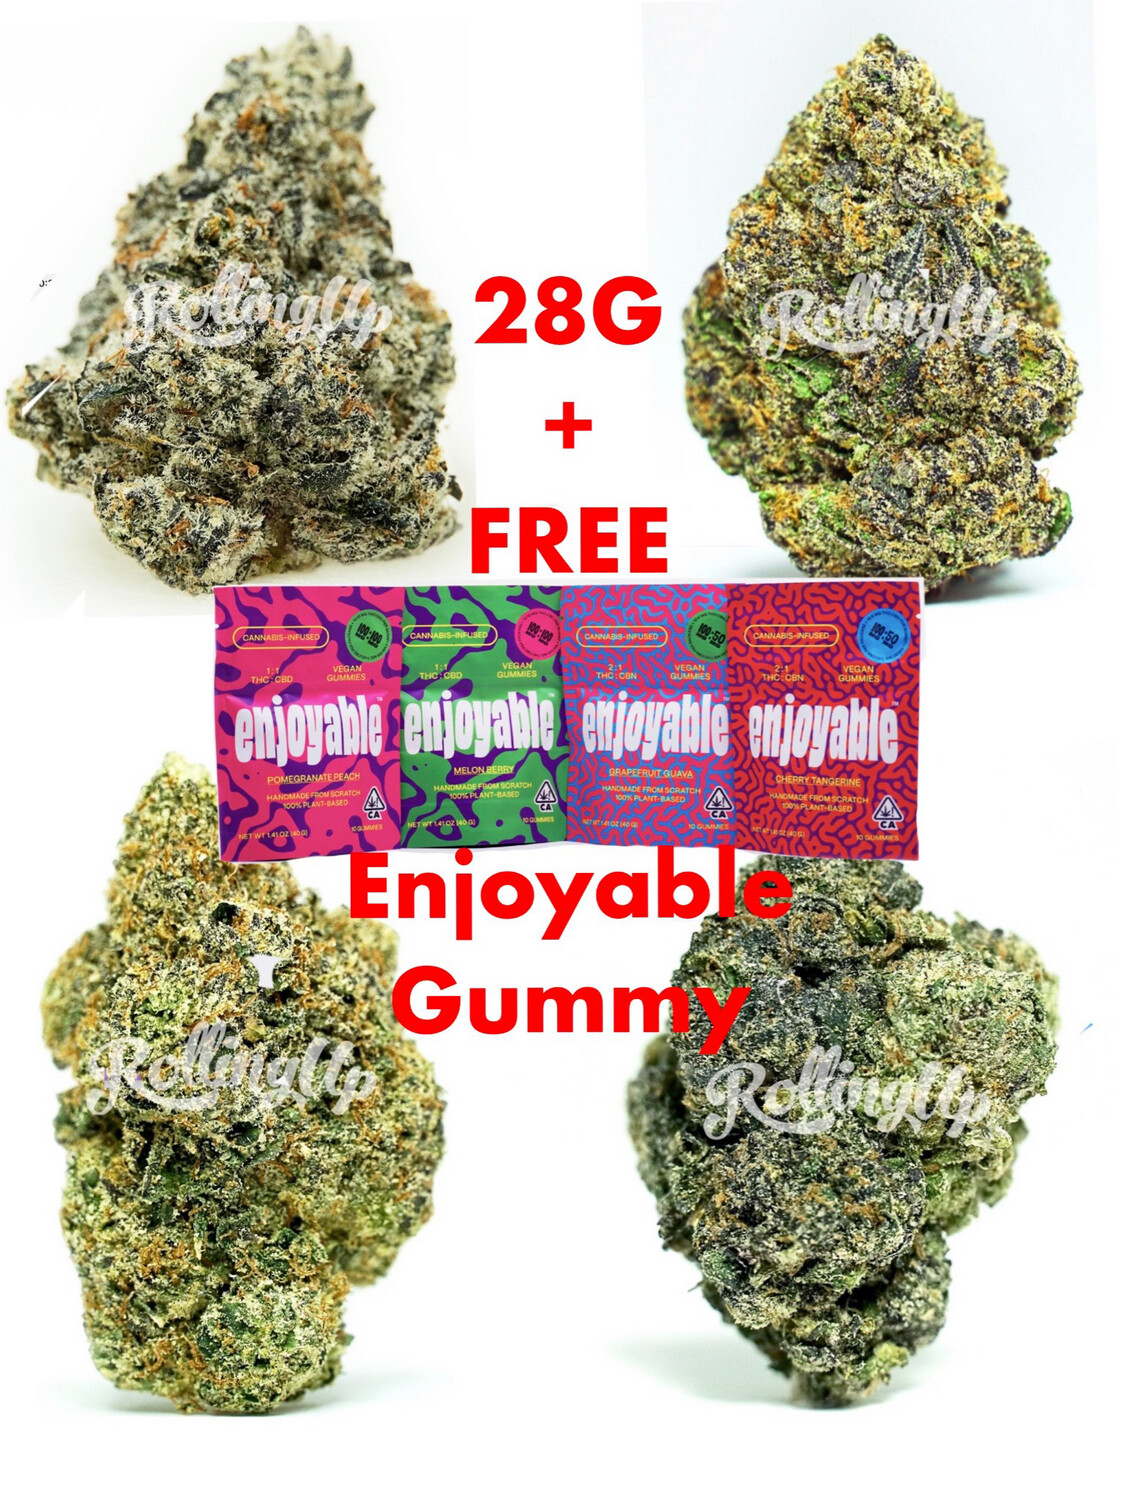 Buy 28G Get A Free 100MG Enjoyable Gummy!